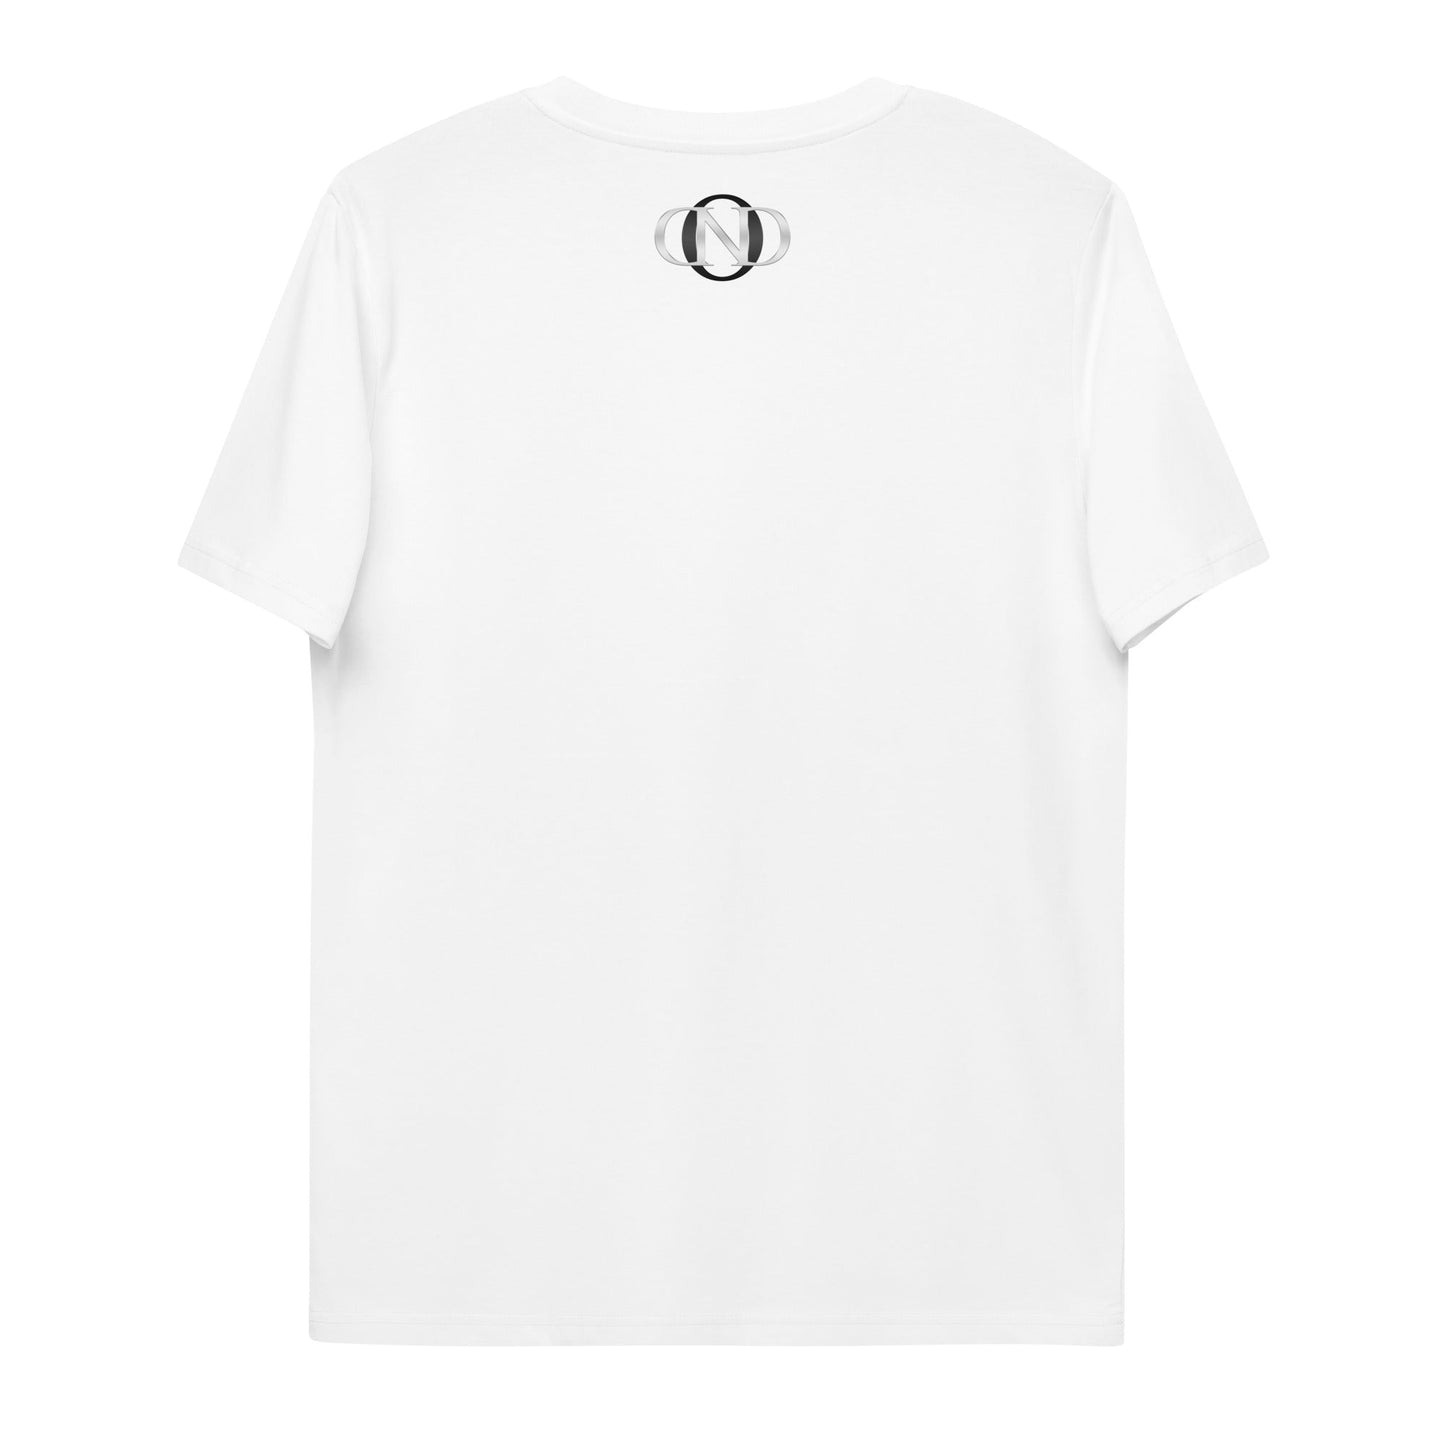 2 Neduz Designs Unisex Socialliberalerna City T-Shirt - 100%